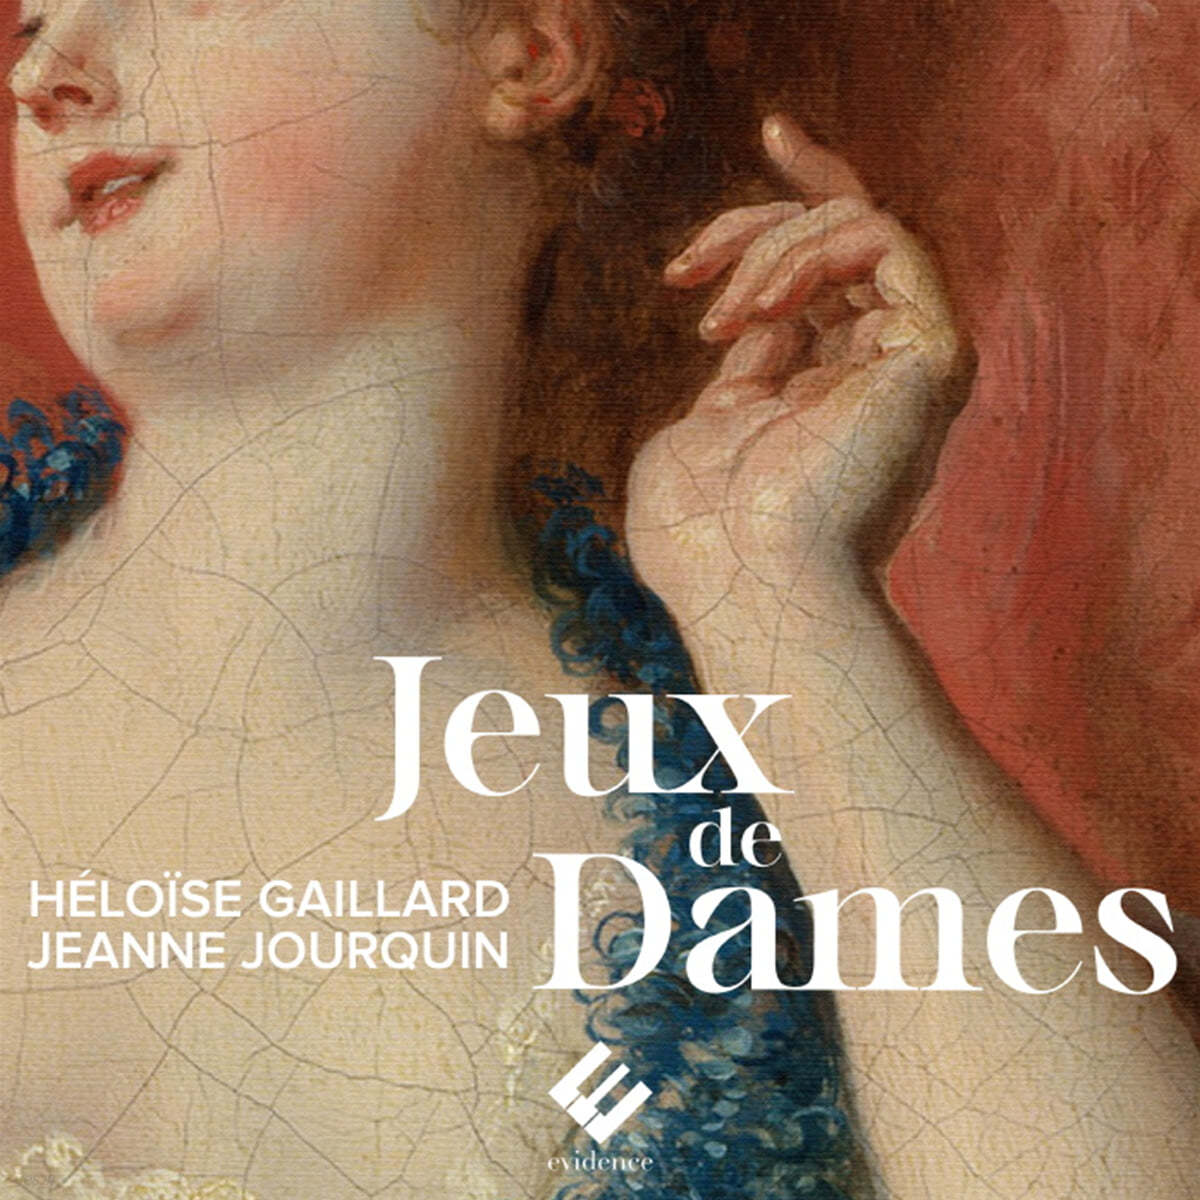 Heloise Gaillard 사랑의 초상 (Jeux De Dames)